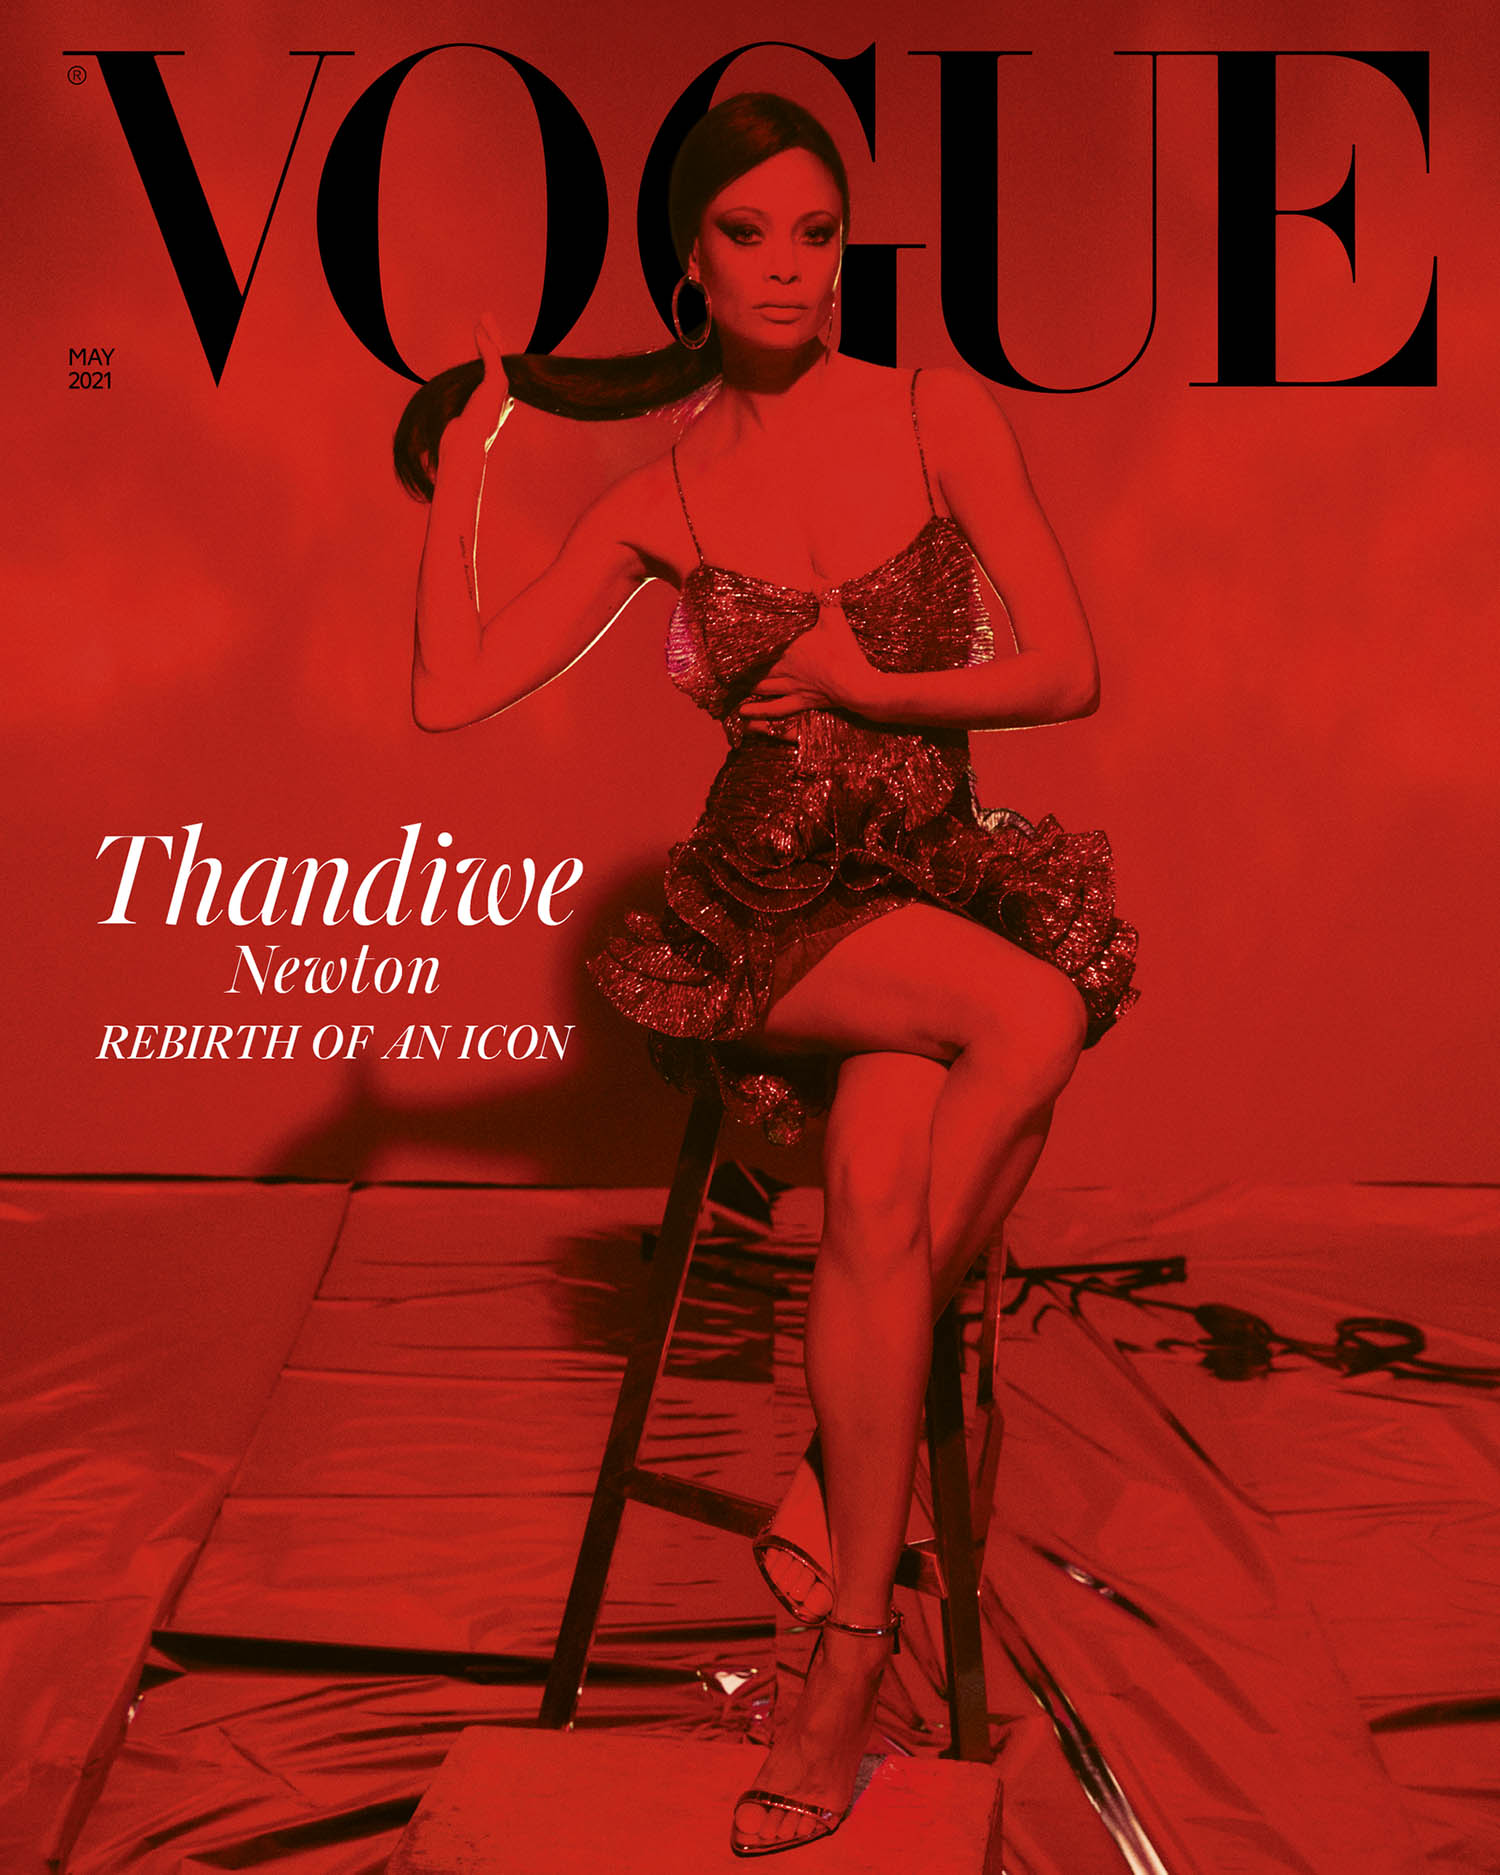 Thandiwe Newton covers British Vogue May 2021 by Mikael Jansson